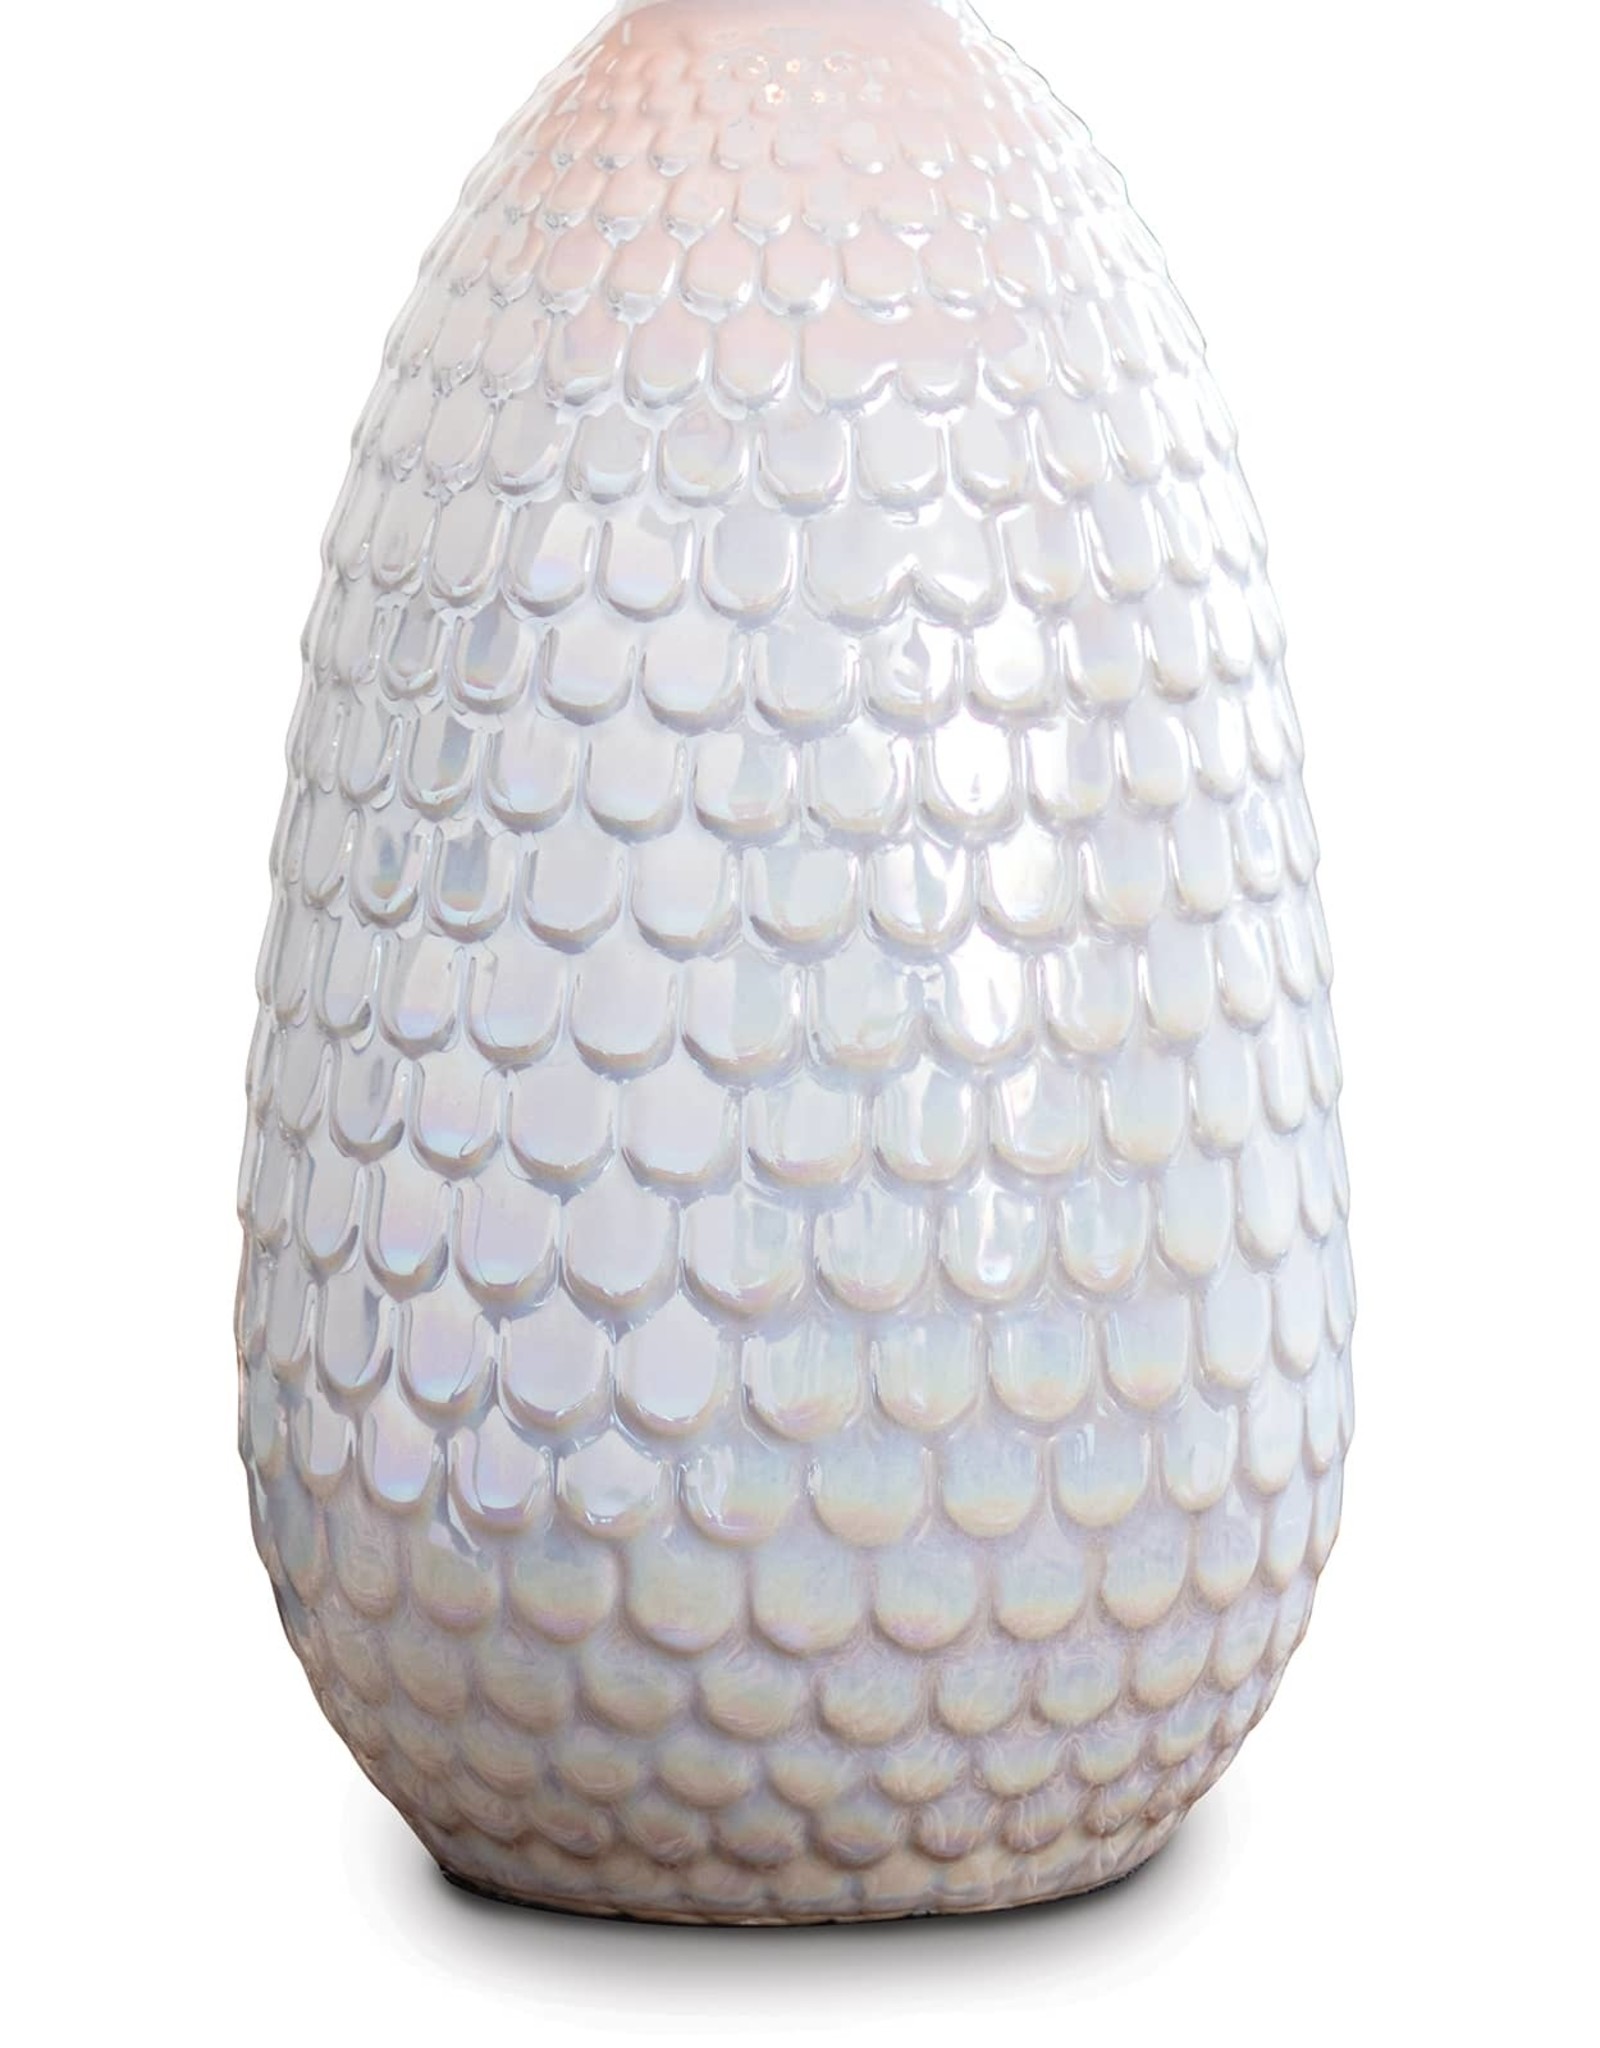 Coastal Living Glimmer Ceramic Table Lamp (Pearlized White)